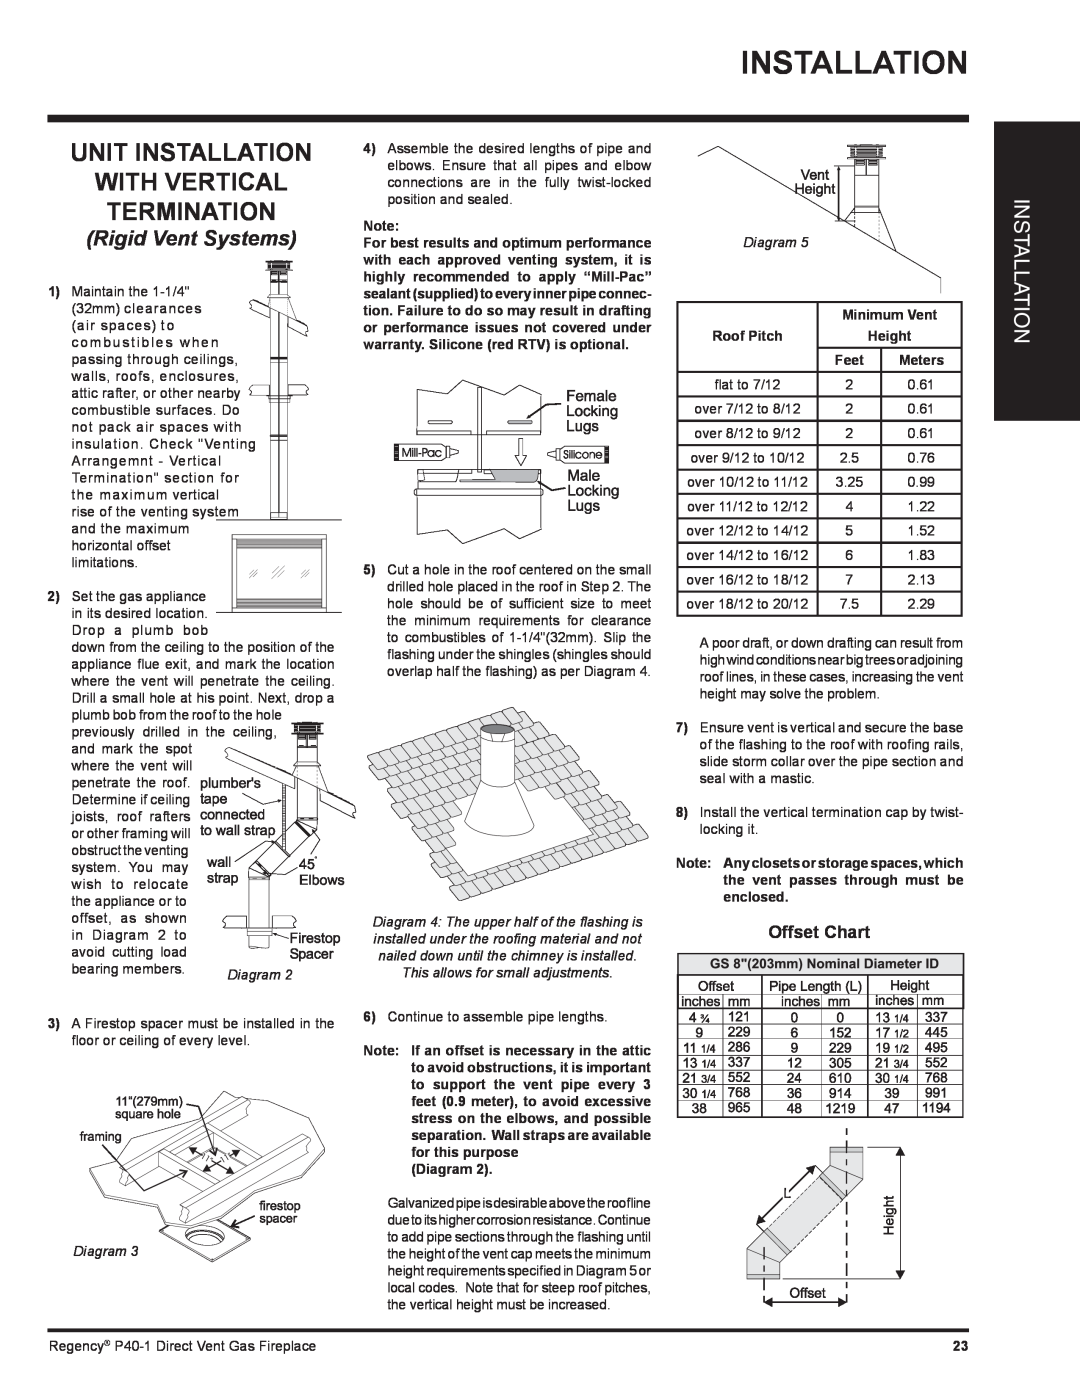 Regency P40-LP1, P40-NG1 Unit Installation With Vertical Termination, Rigid Vent Systems, Diagram, Minimum Vent, Feet 